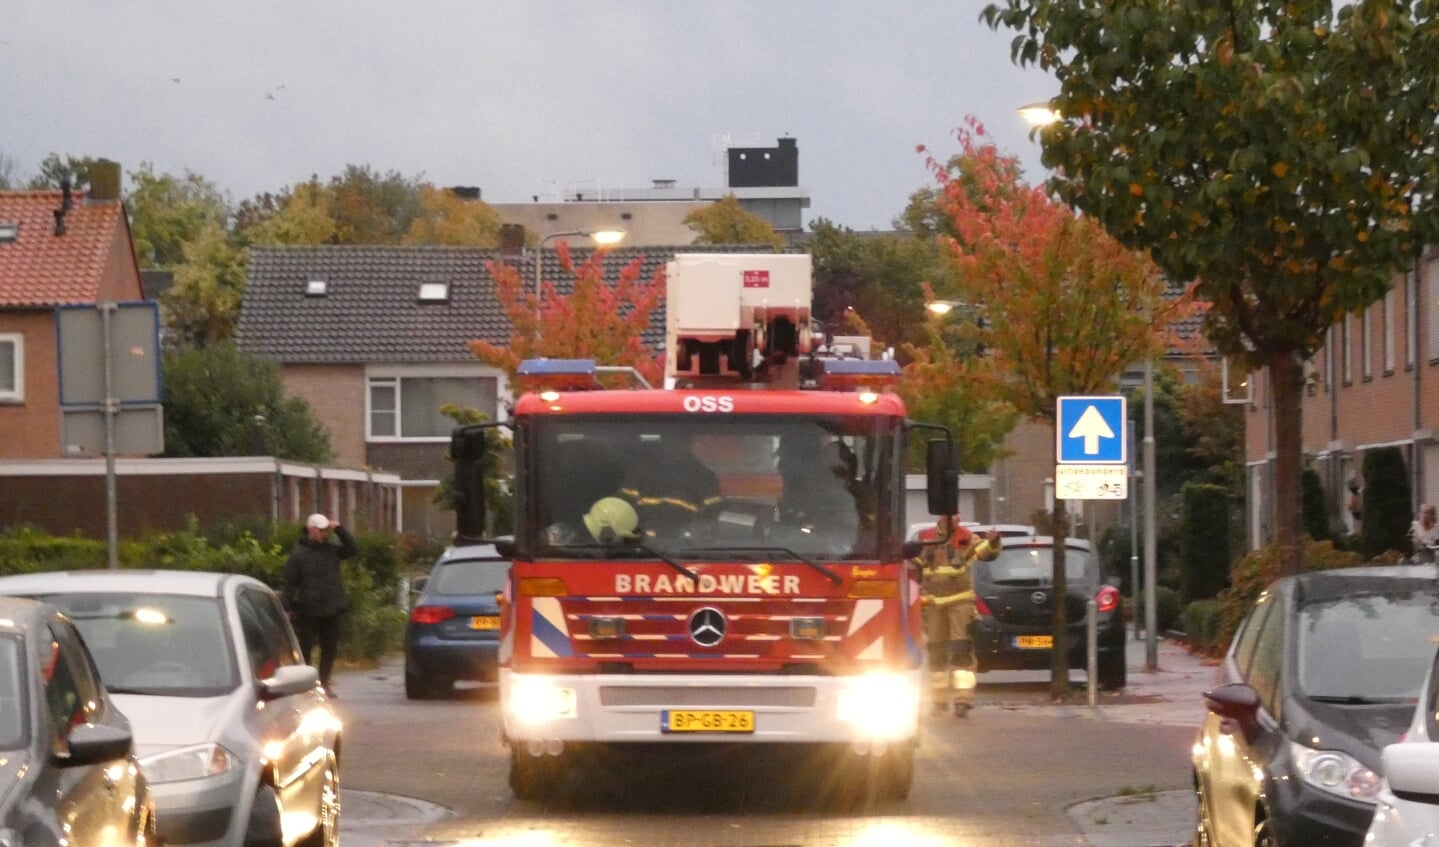 Brandweer in de Piersonstraat. (Foto: Thomas)